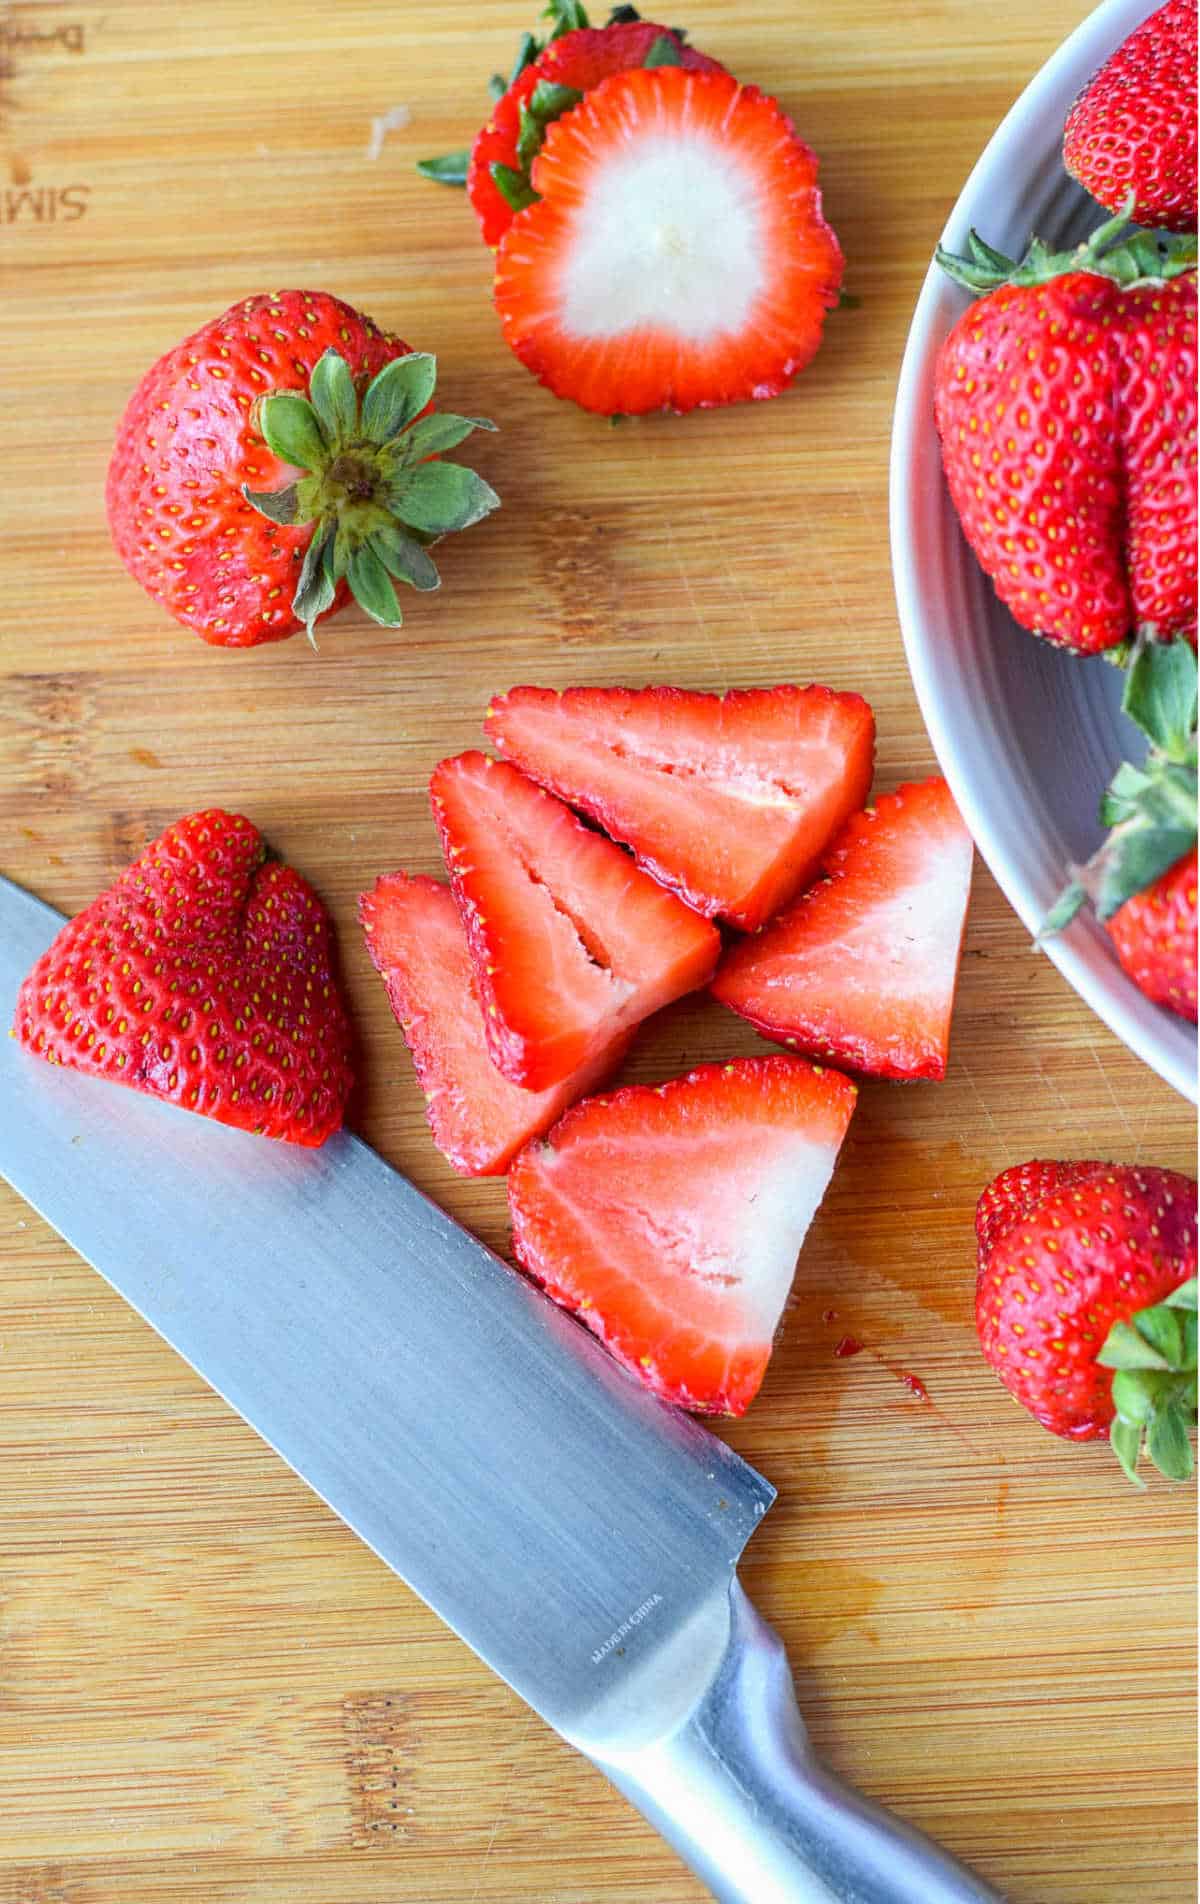 Strawberries being sliced up.